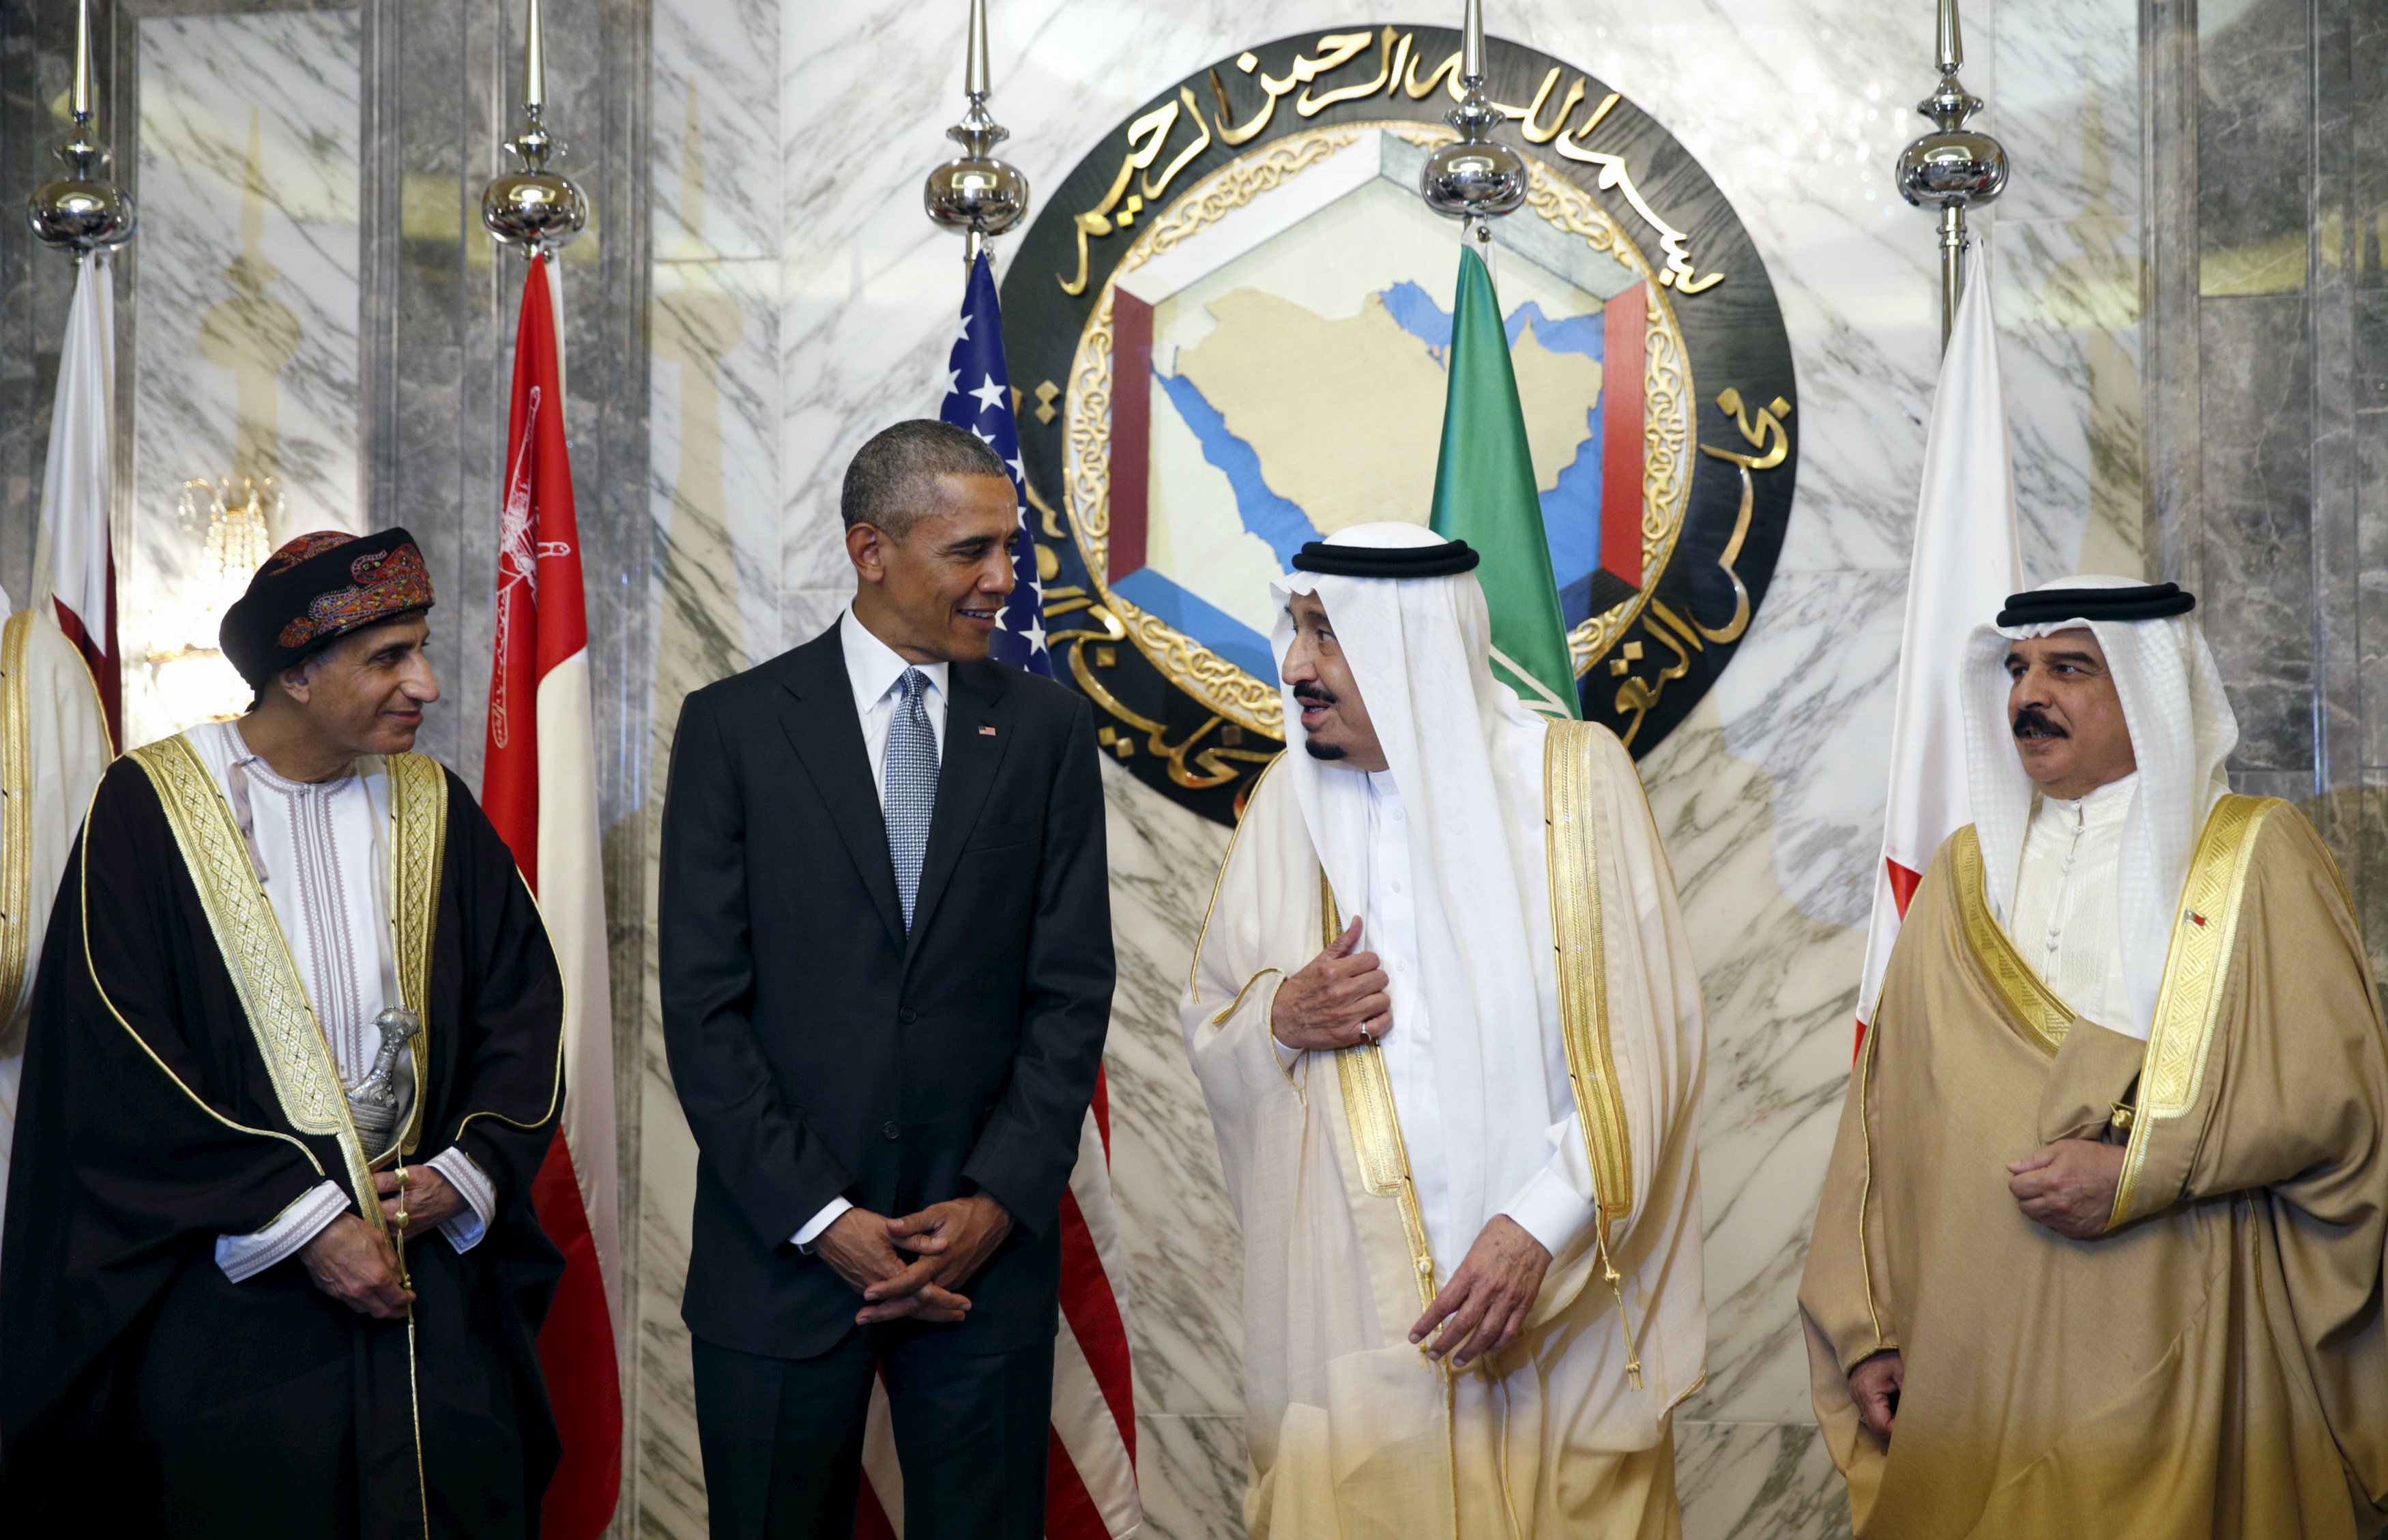 Arab leaders join Obama for tense talks in Saudi Arabia - CBS News